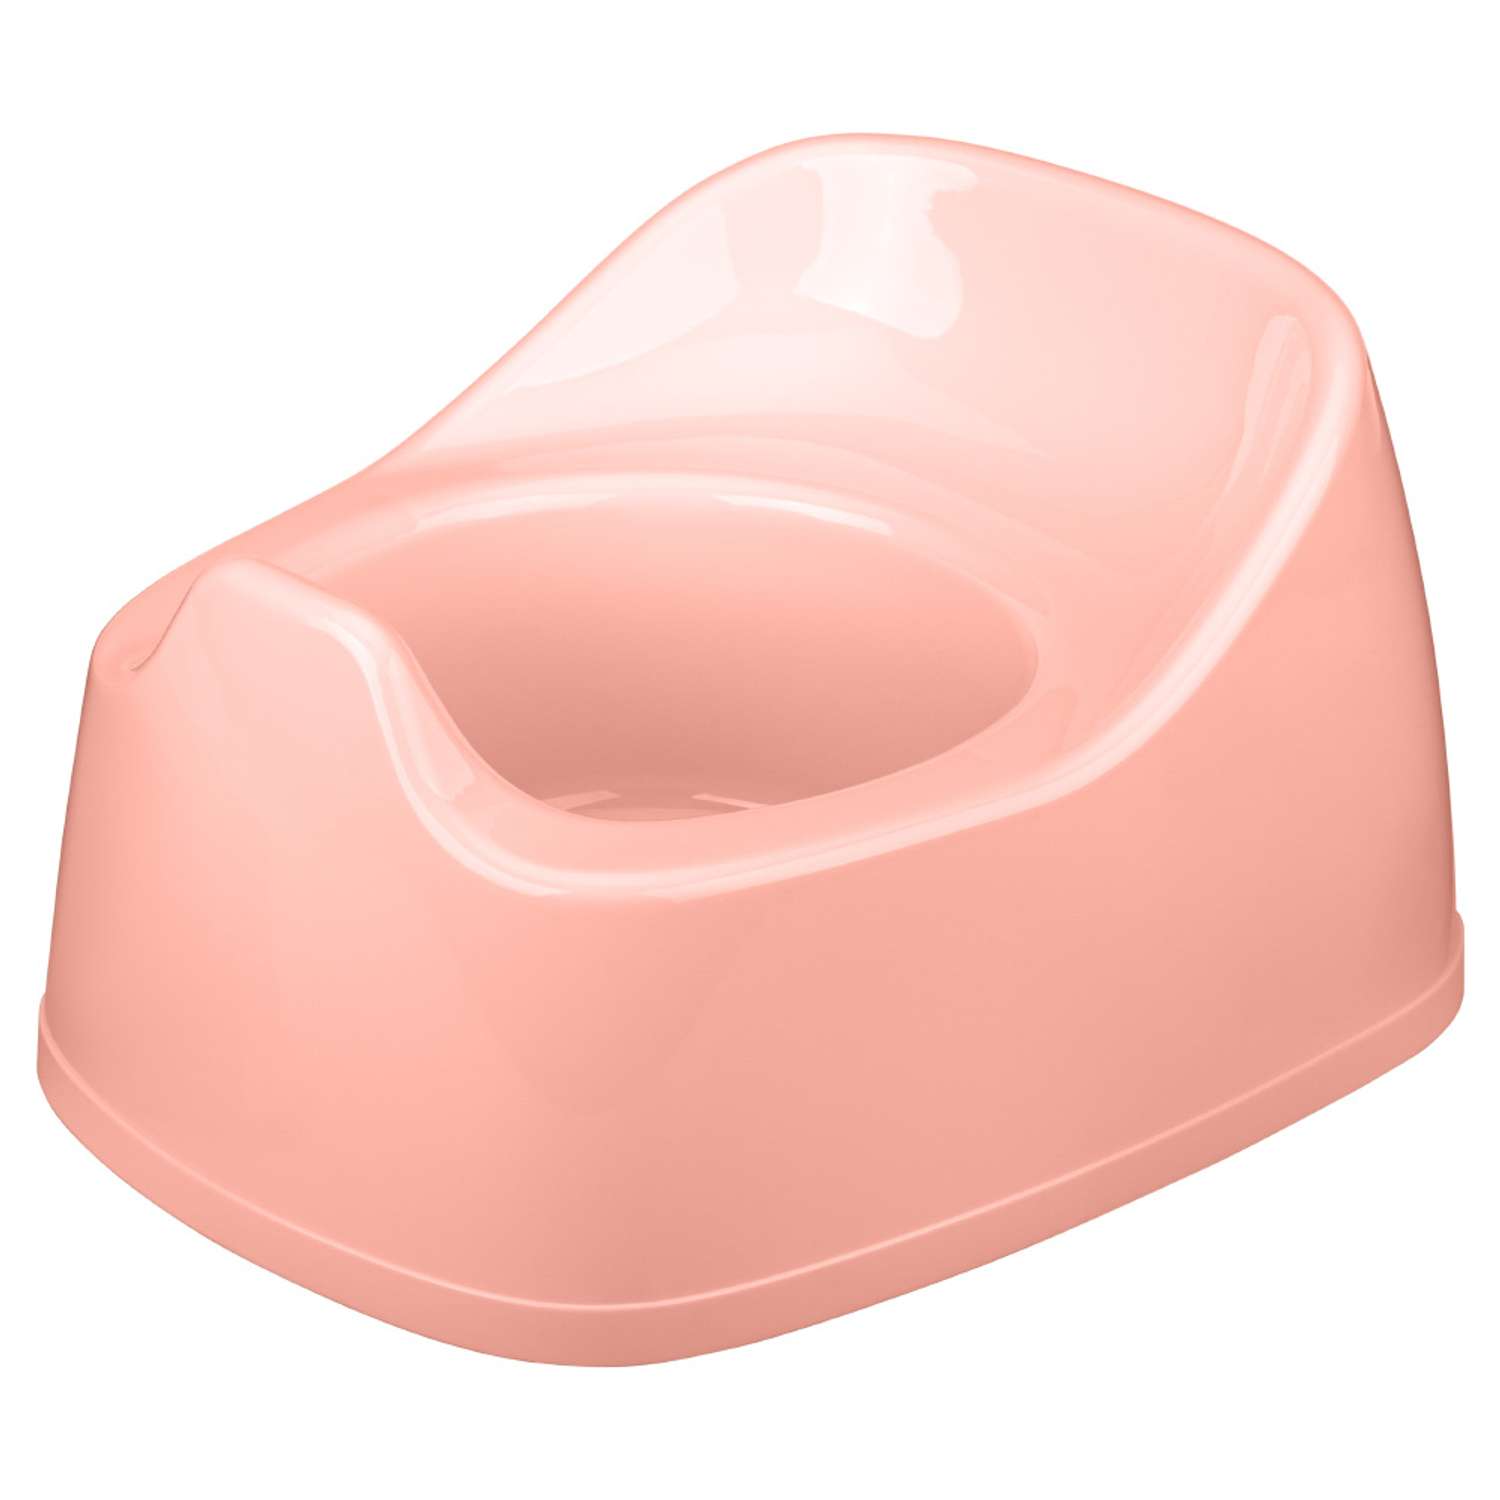 Горшок Пластишка детский 270х220х150 мм светло-розовый - фото 2